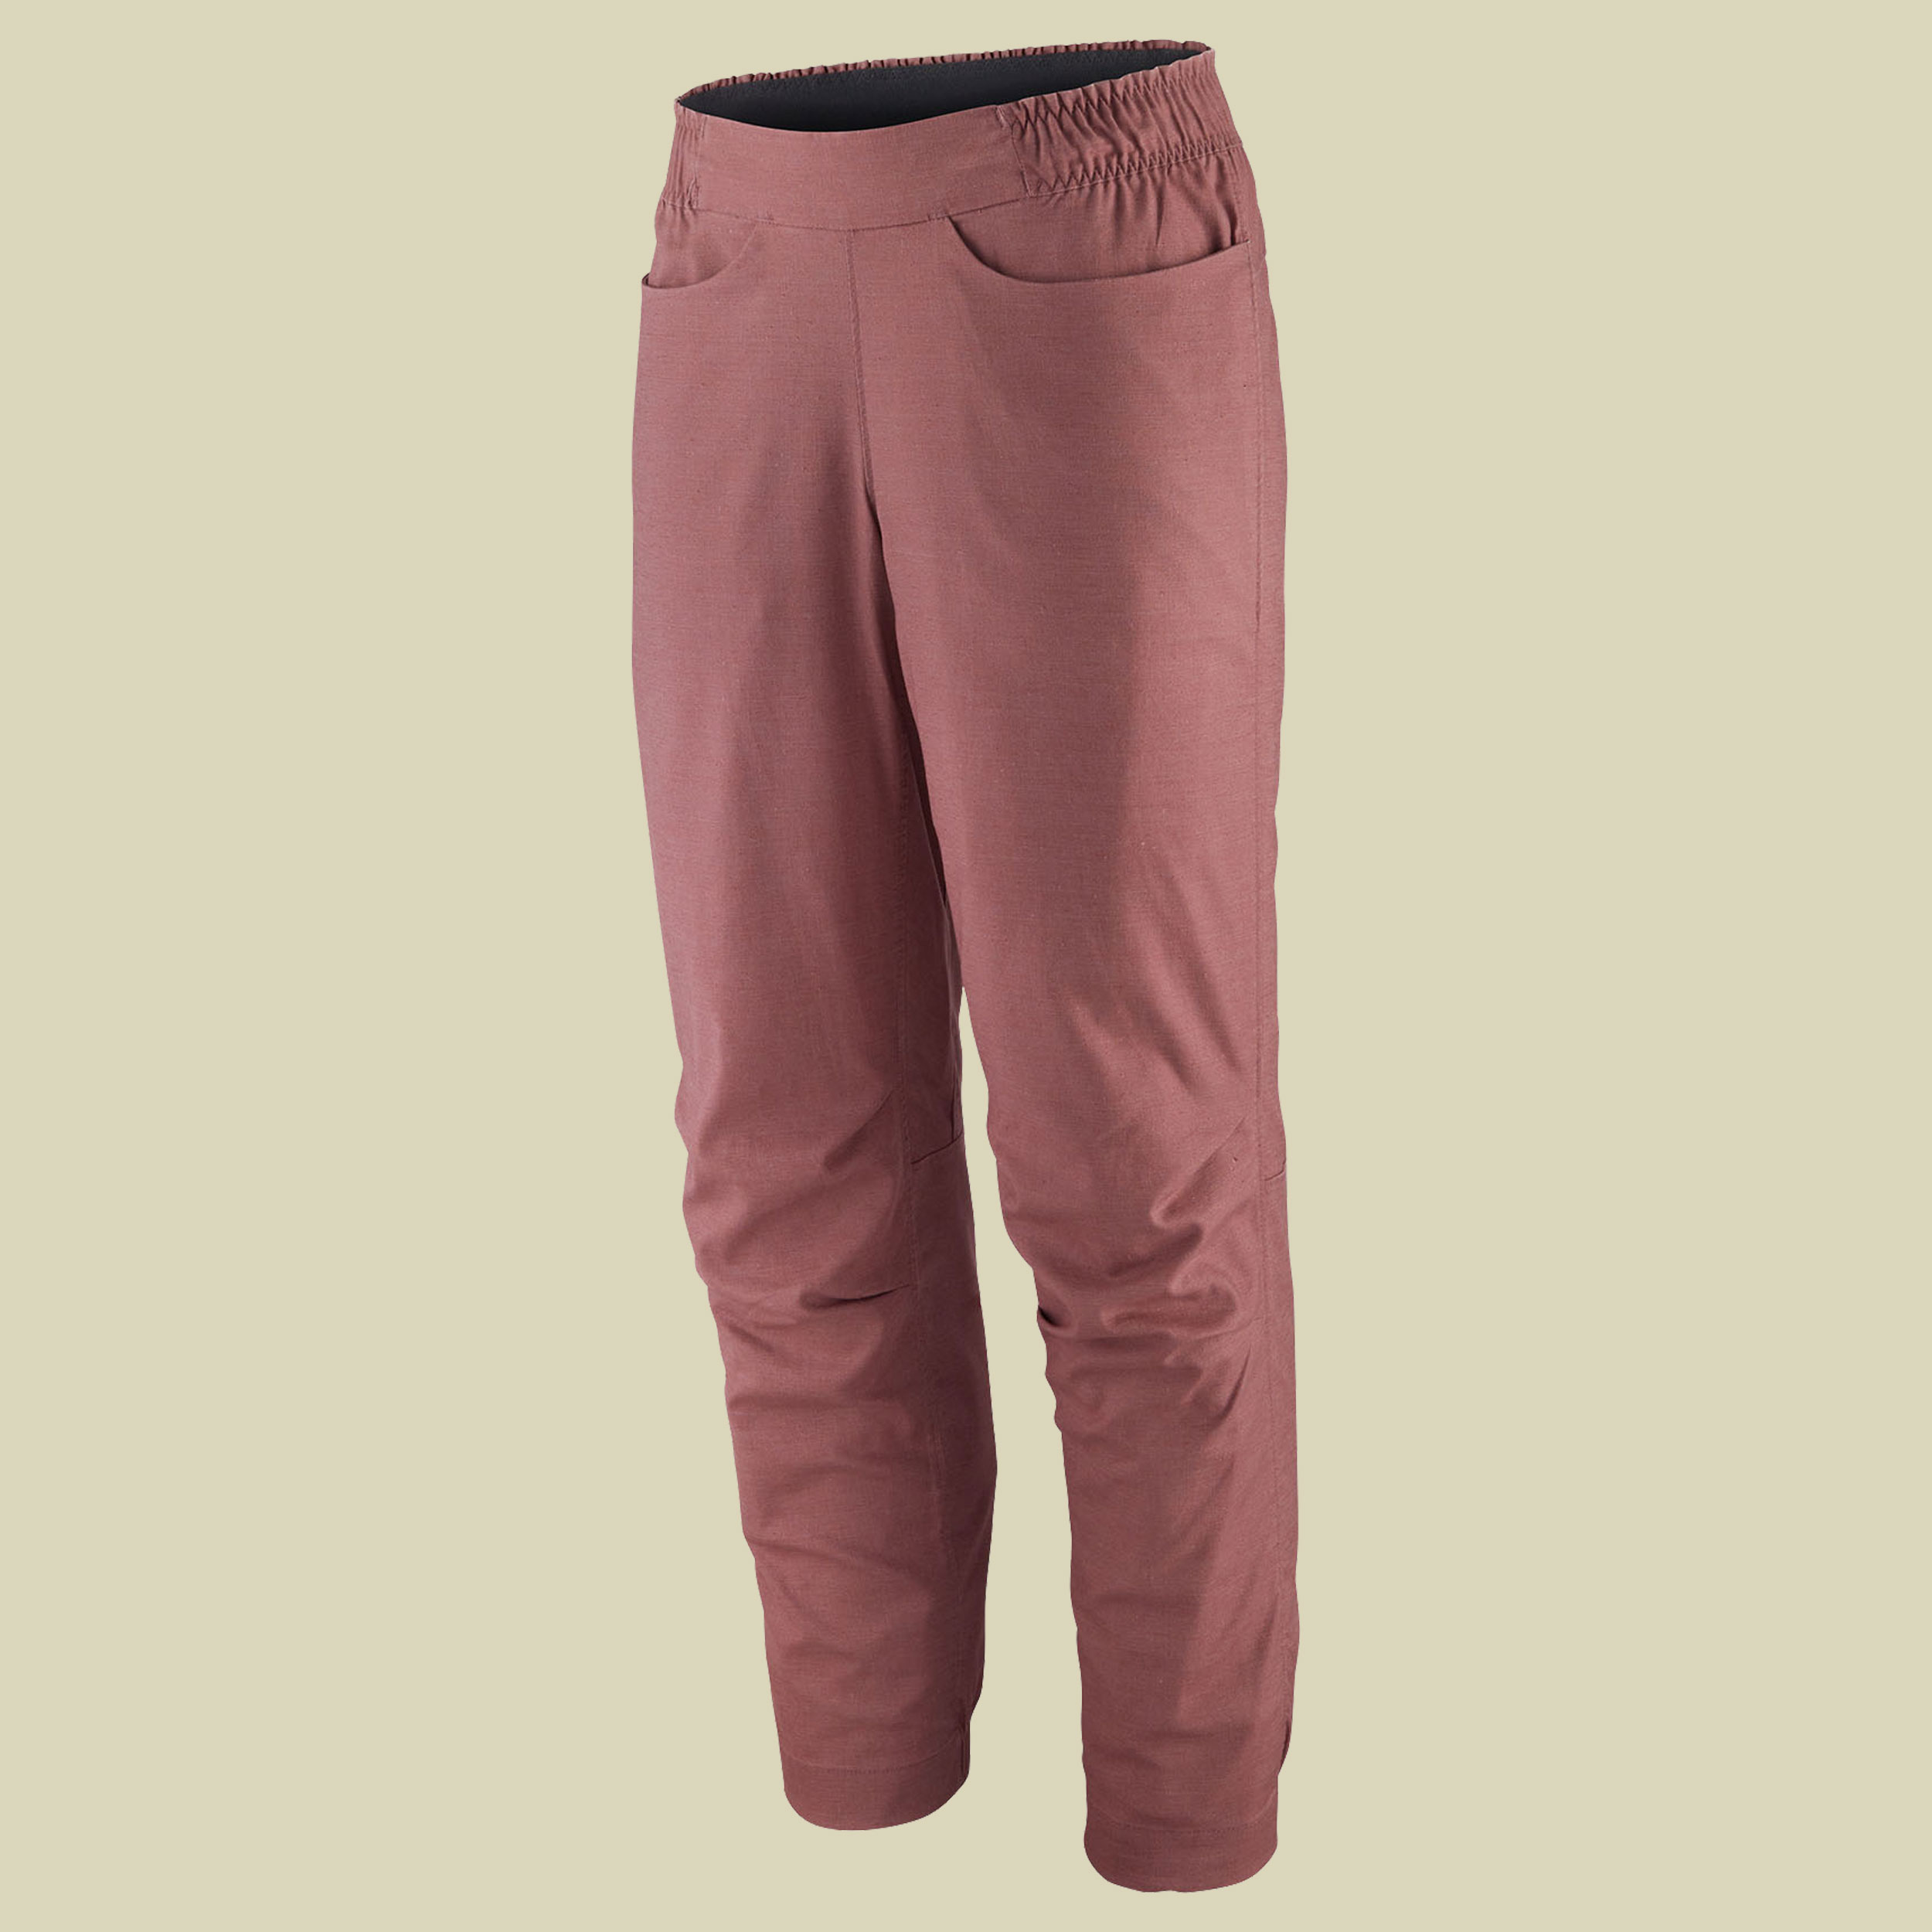 Hampi Rock Pants Women Größe XL (12) Farbe evening mauve